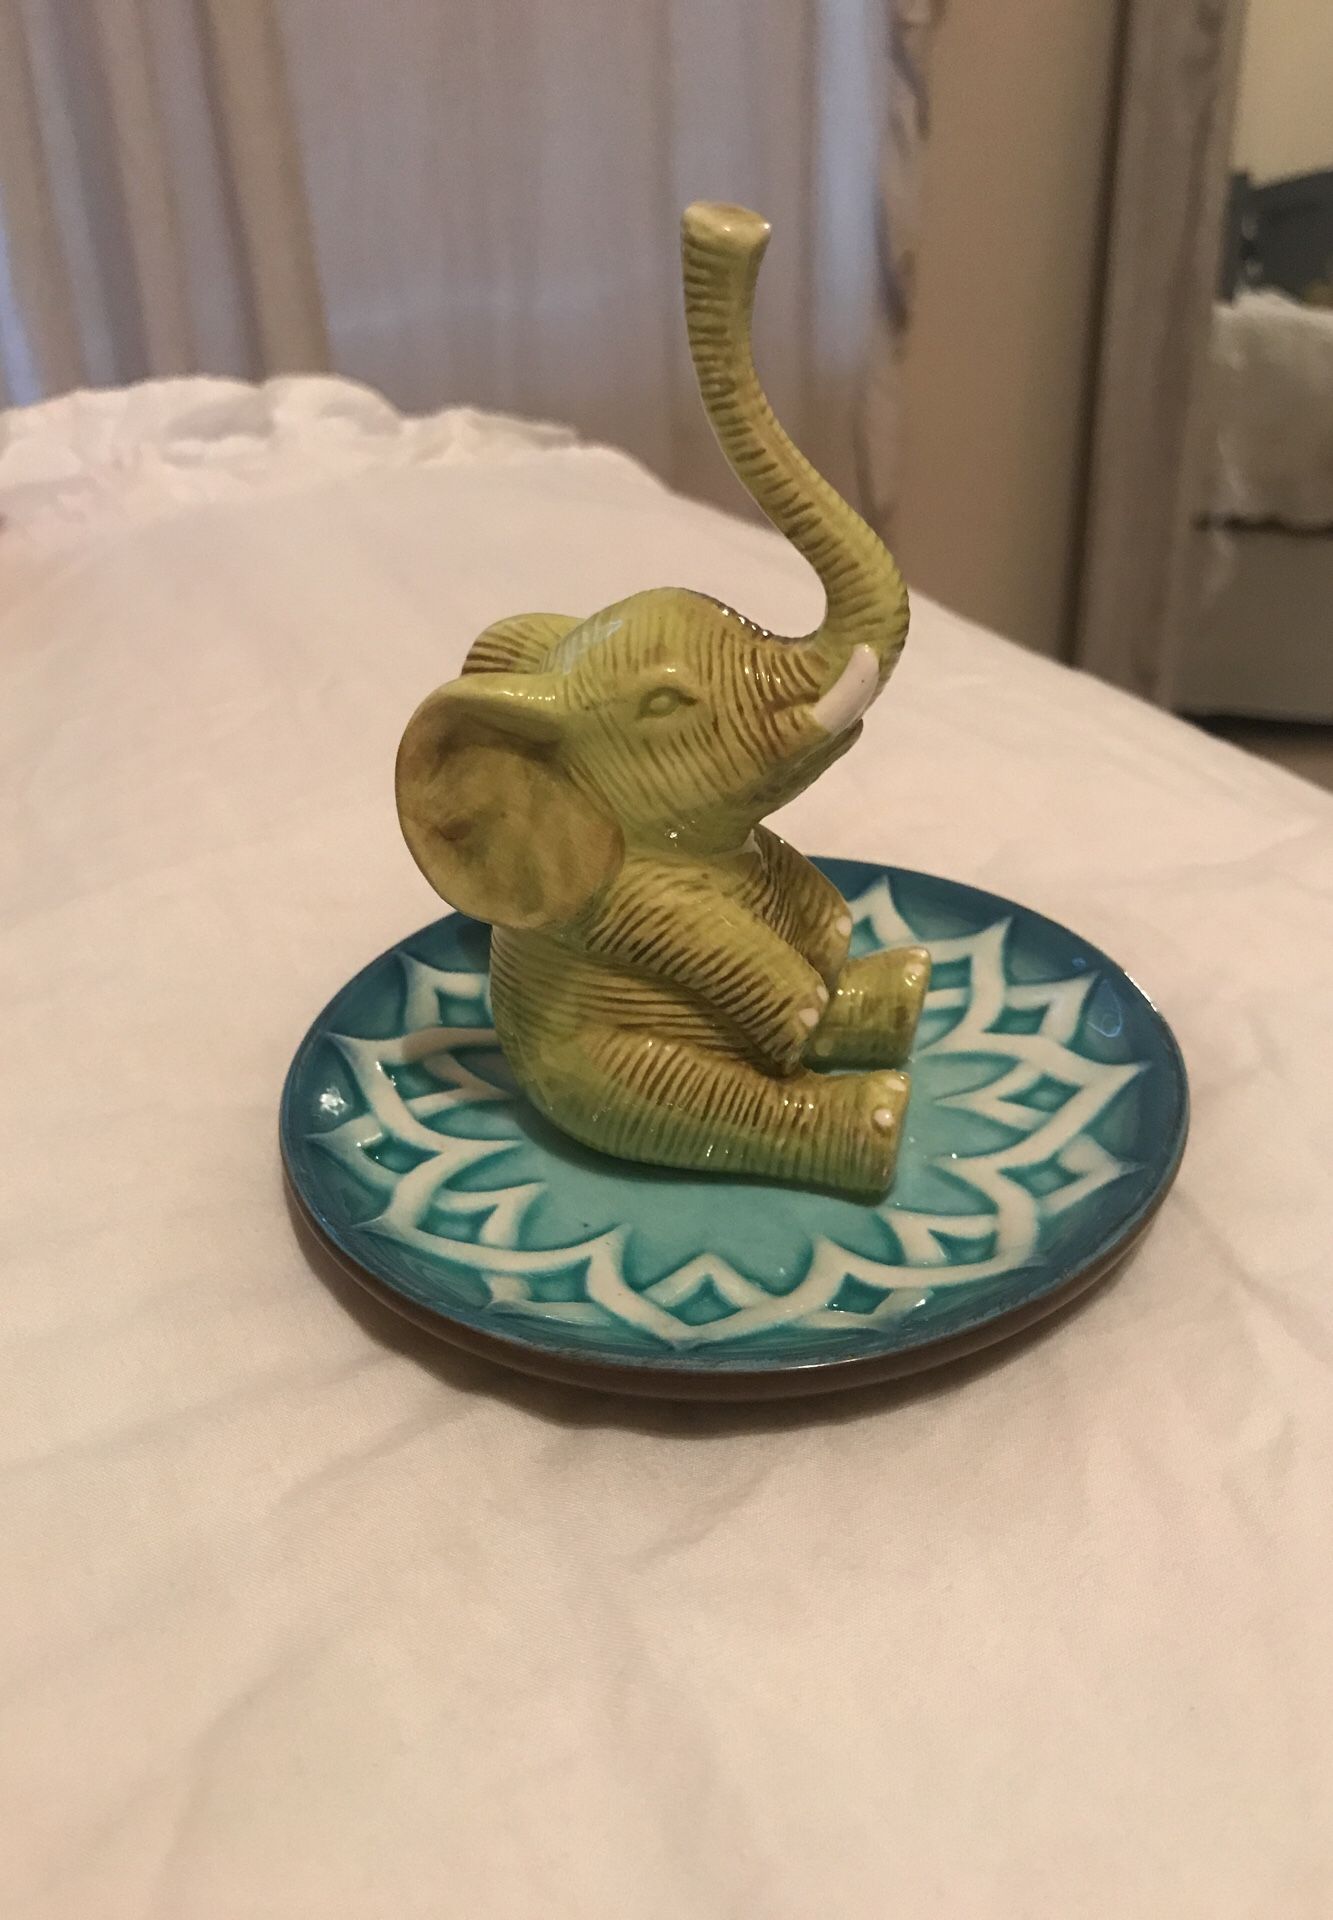 Elephant jewelry dish holder